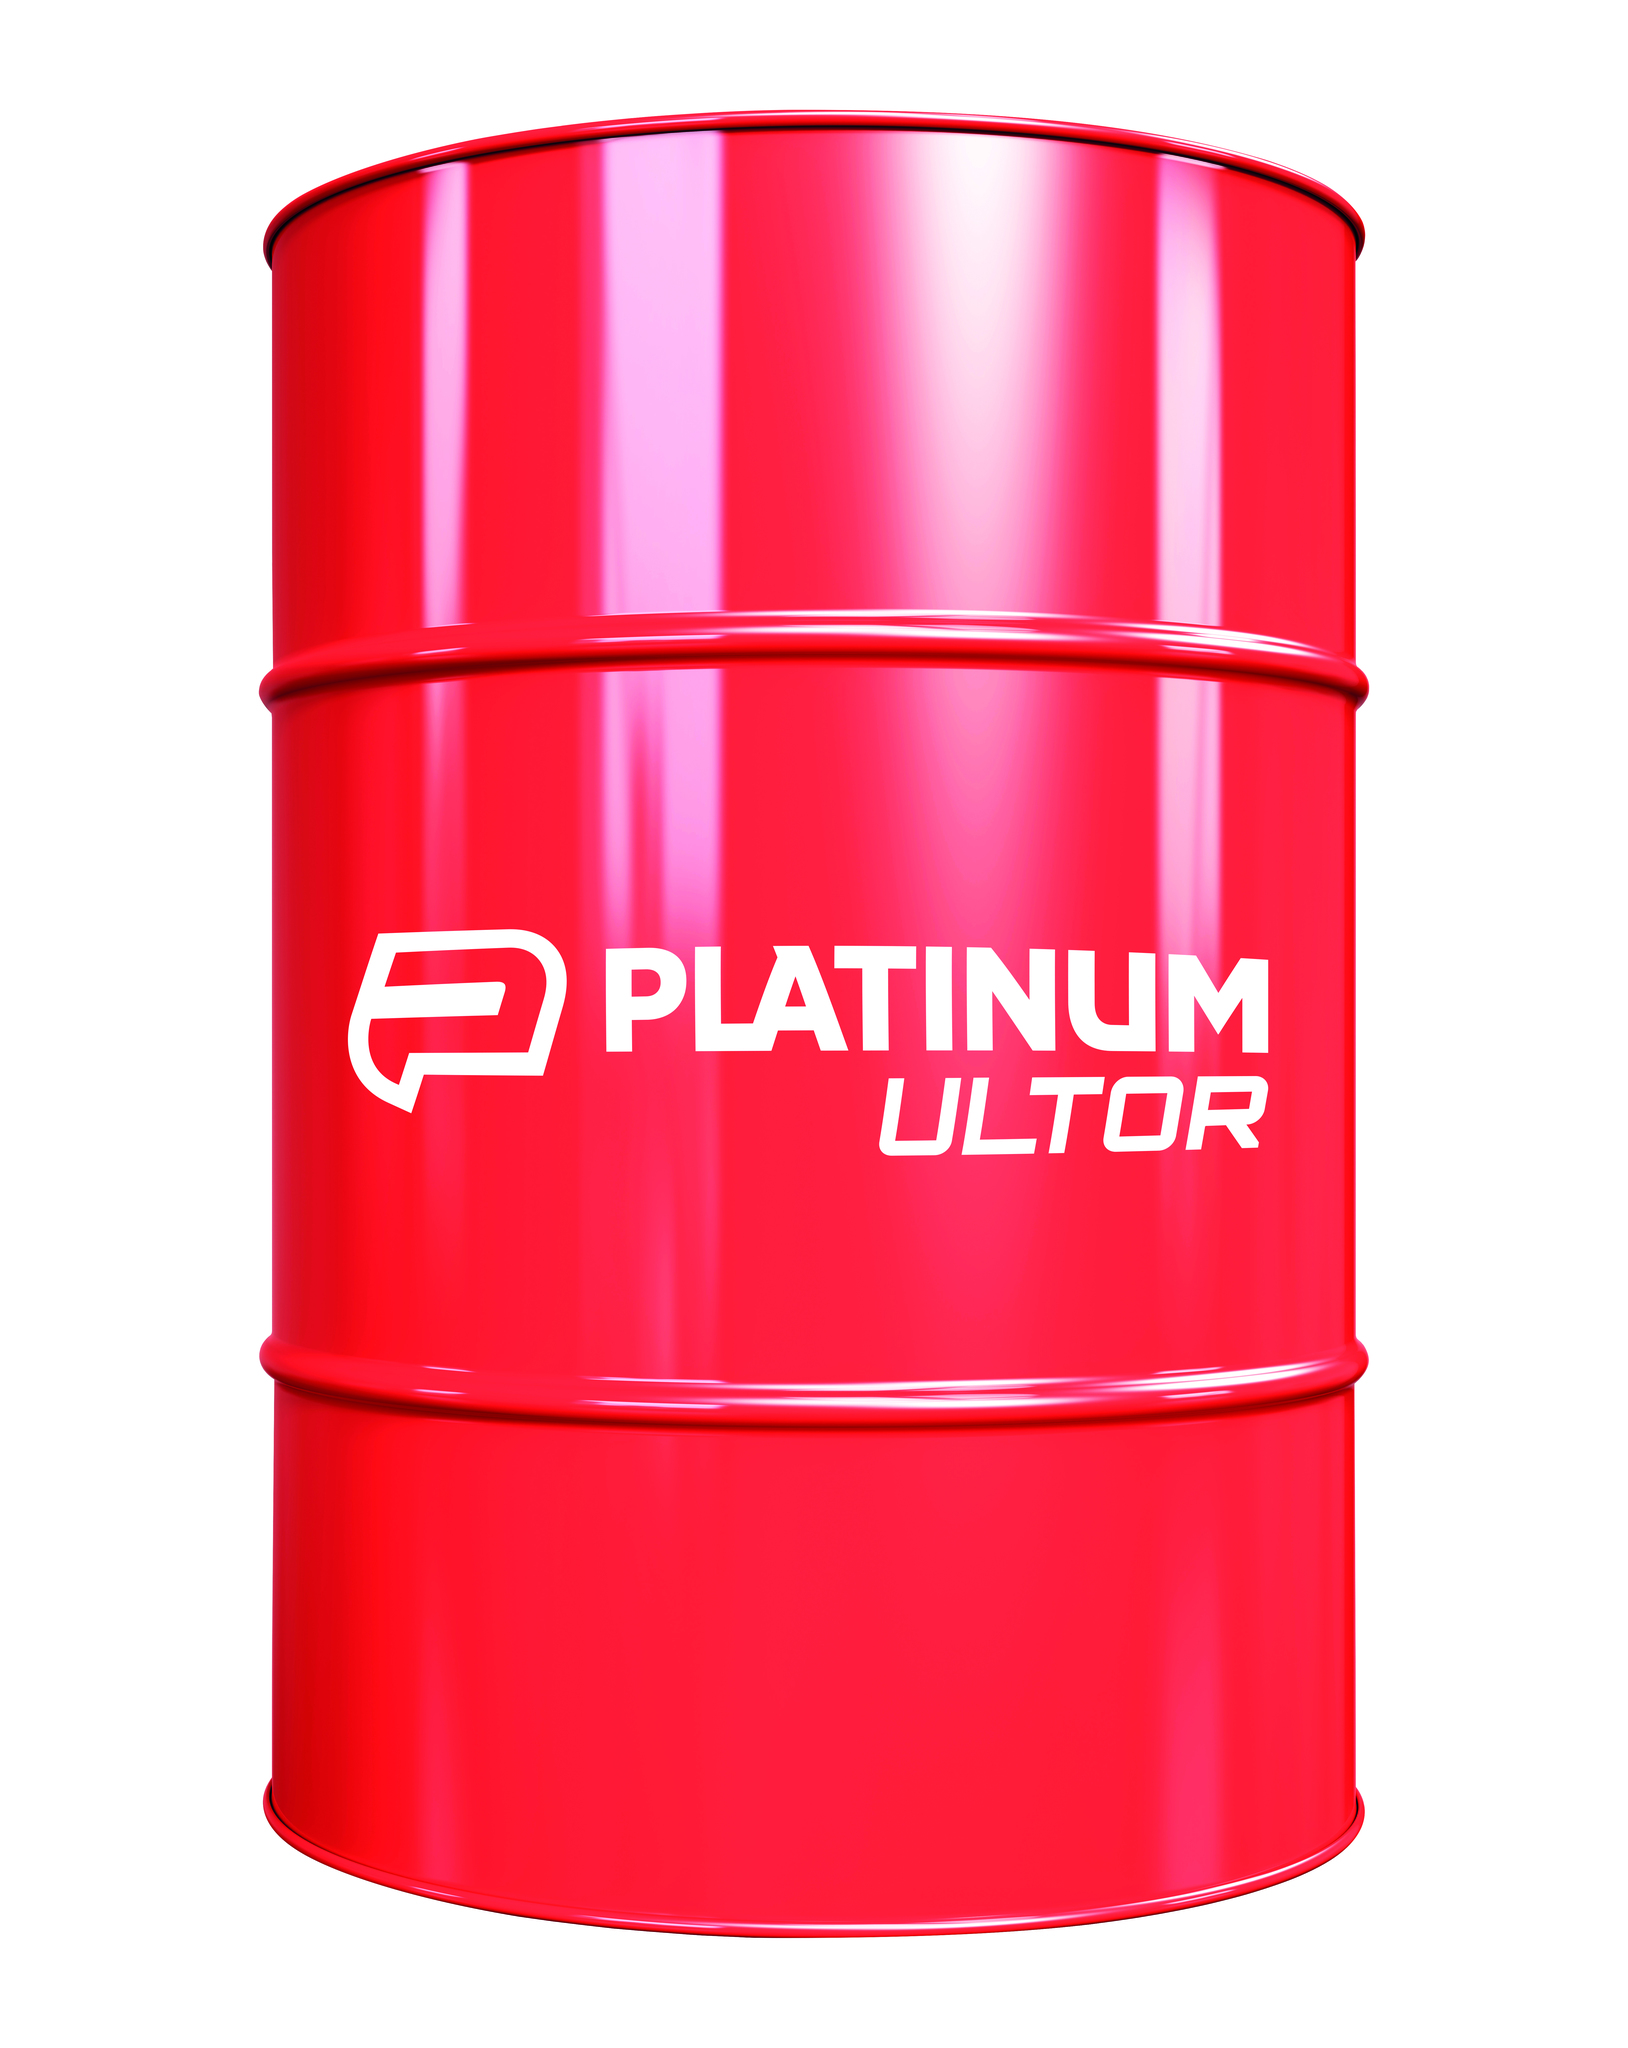 OrlenOil Platinum Ultor Maximo 5W30 Синтетическое моторное масло